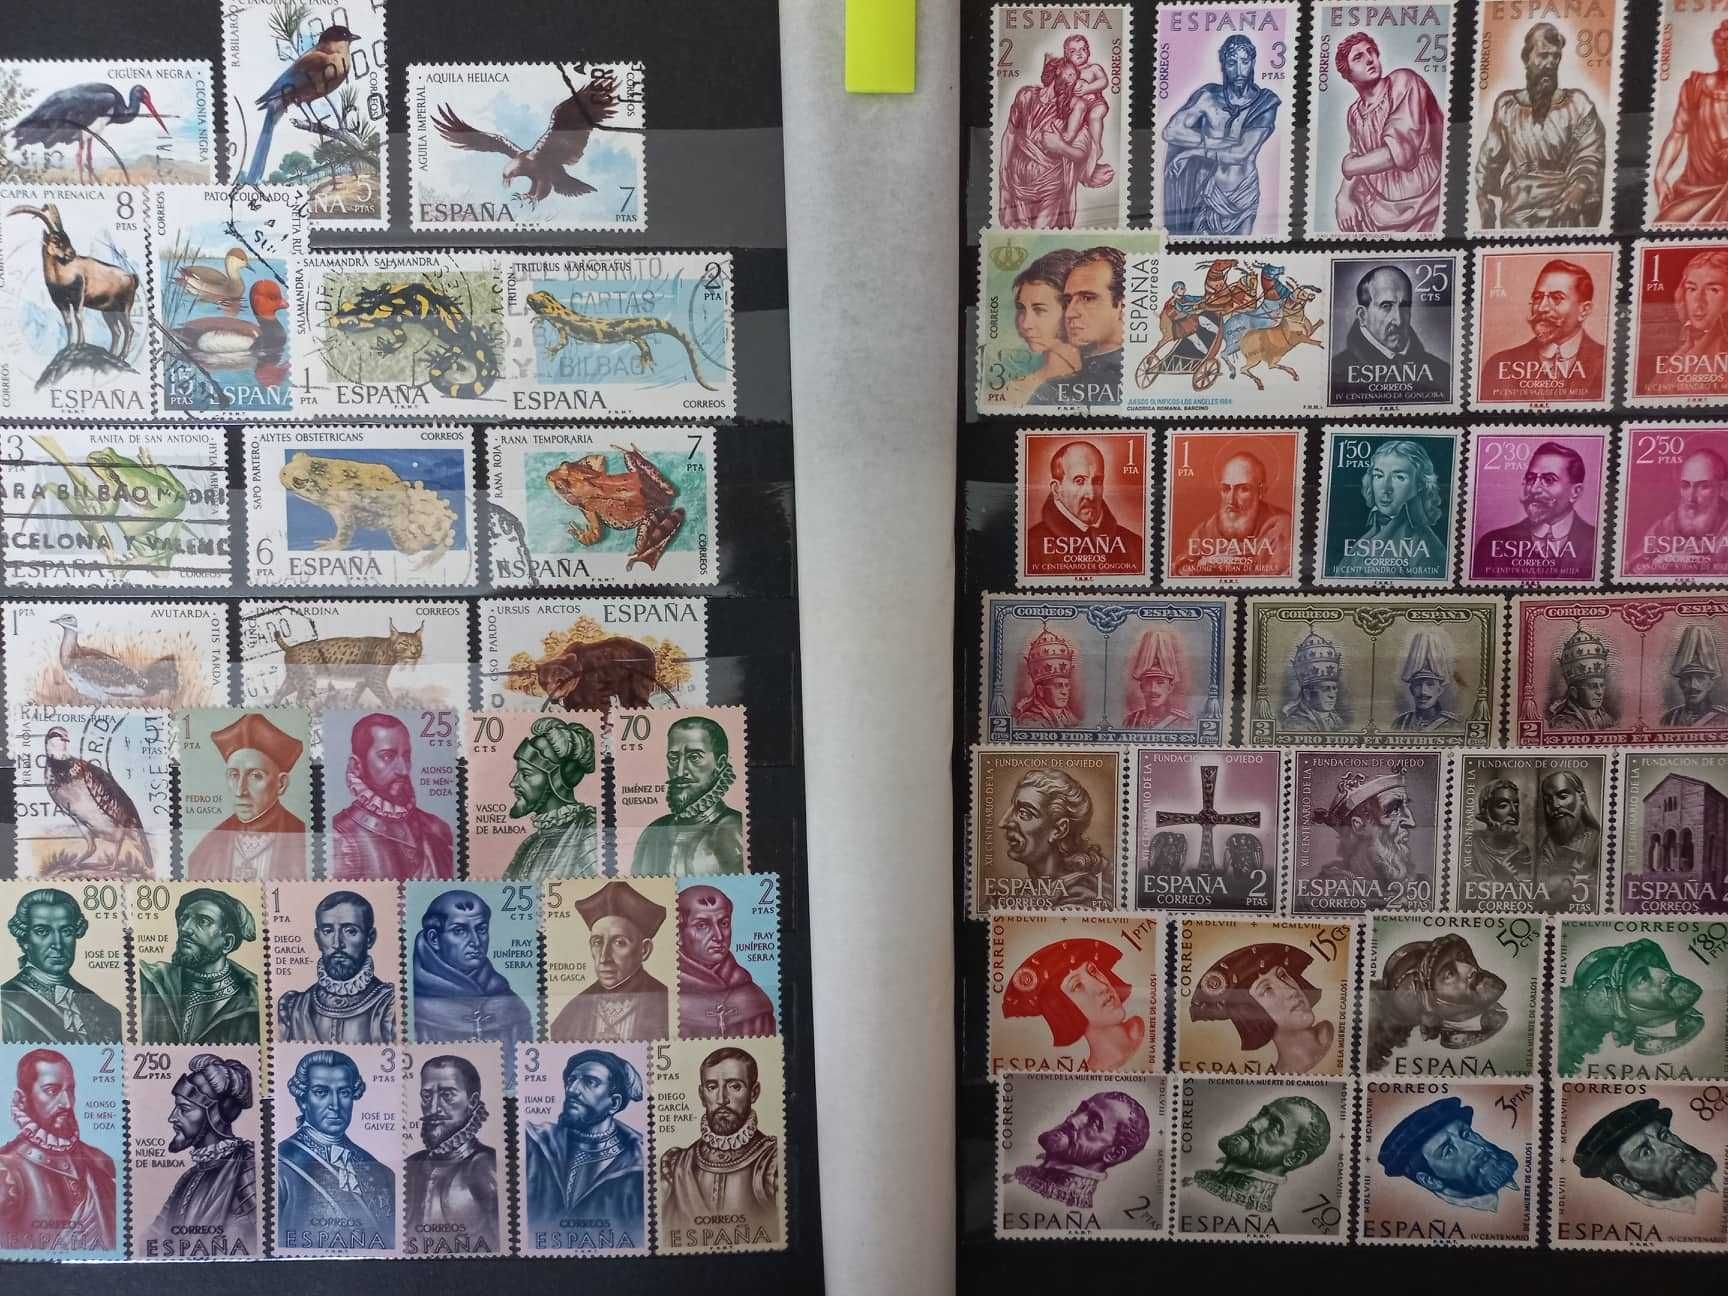 Aprox. 650 timbre clasice si moderne spaniole (1880-1980)